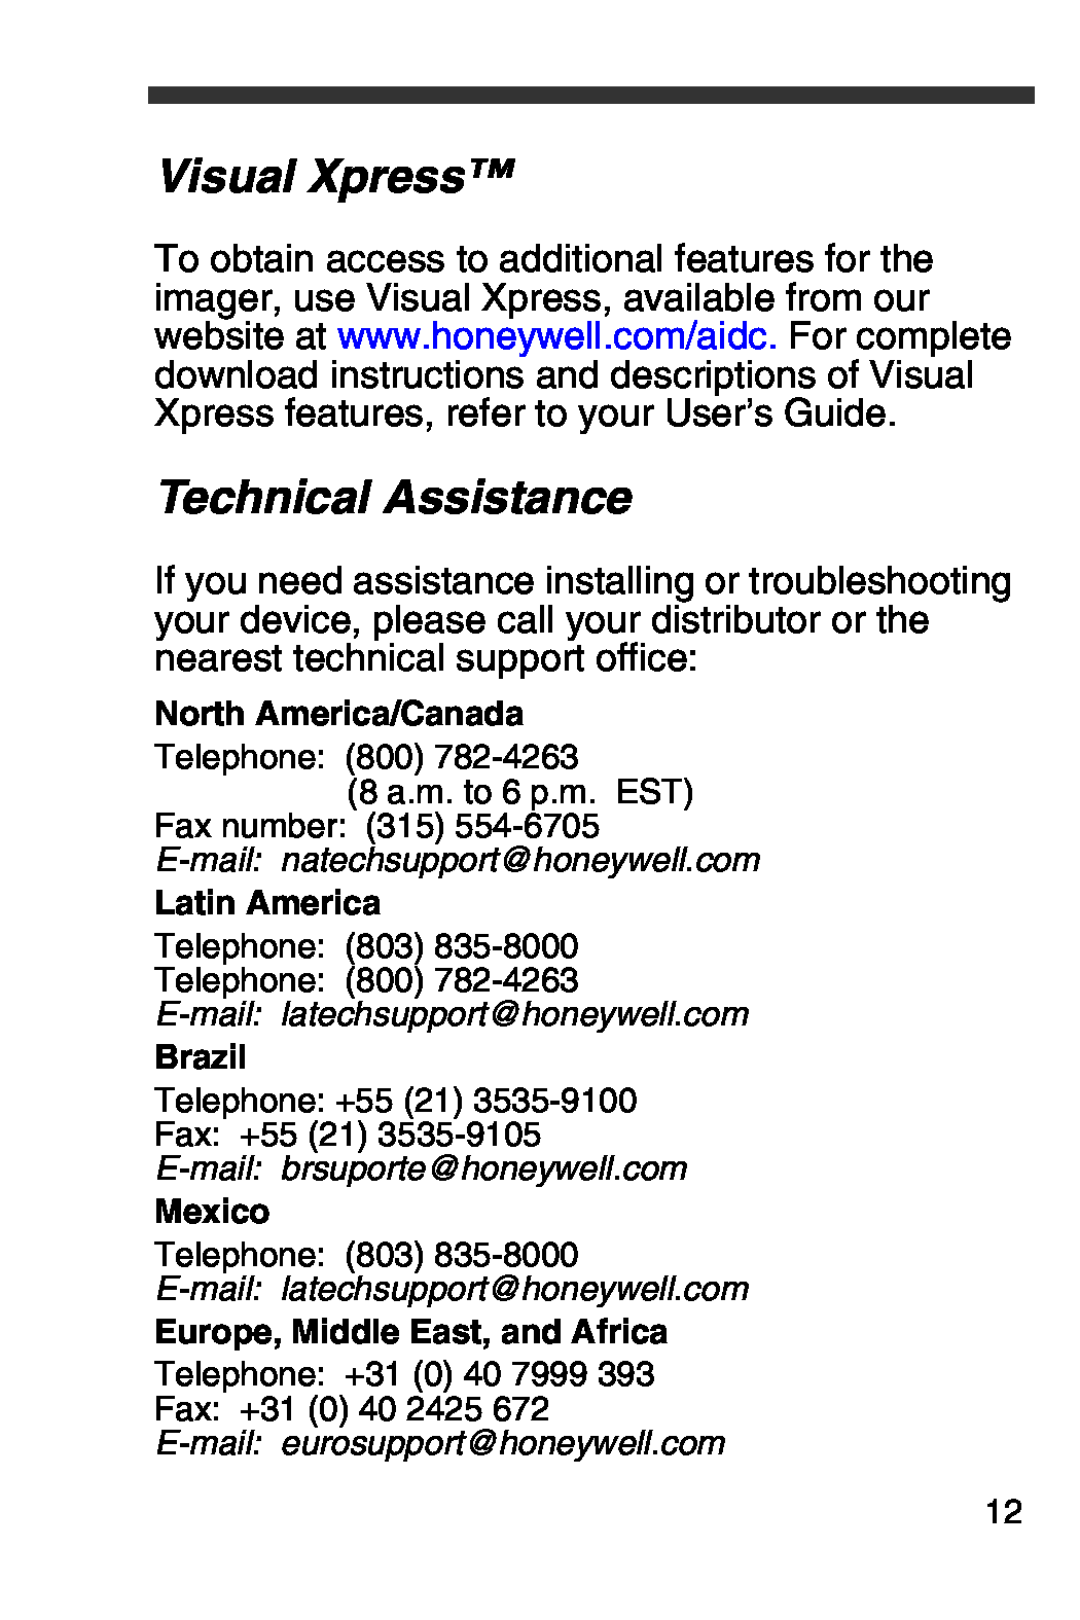 Honeywell 4600g Visual Xpress, Technical Assistance, E-mail natechsupport@honeywell.com, E-mail brsuporte@honeywell.com 